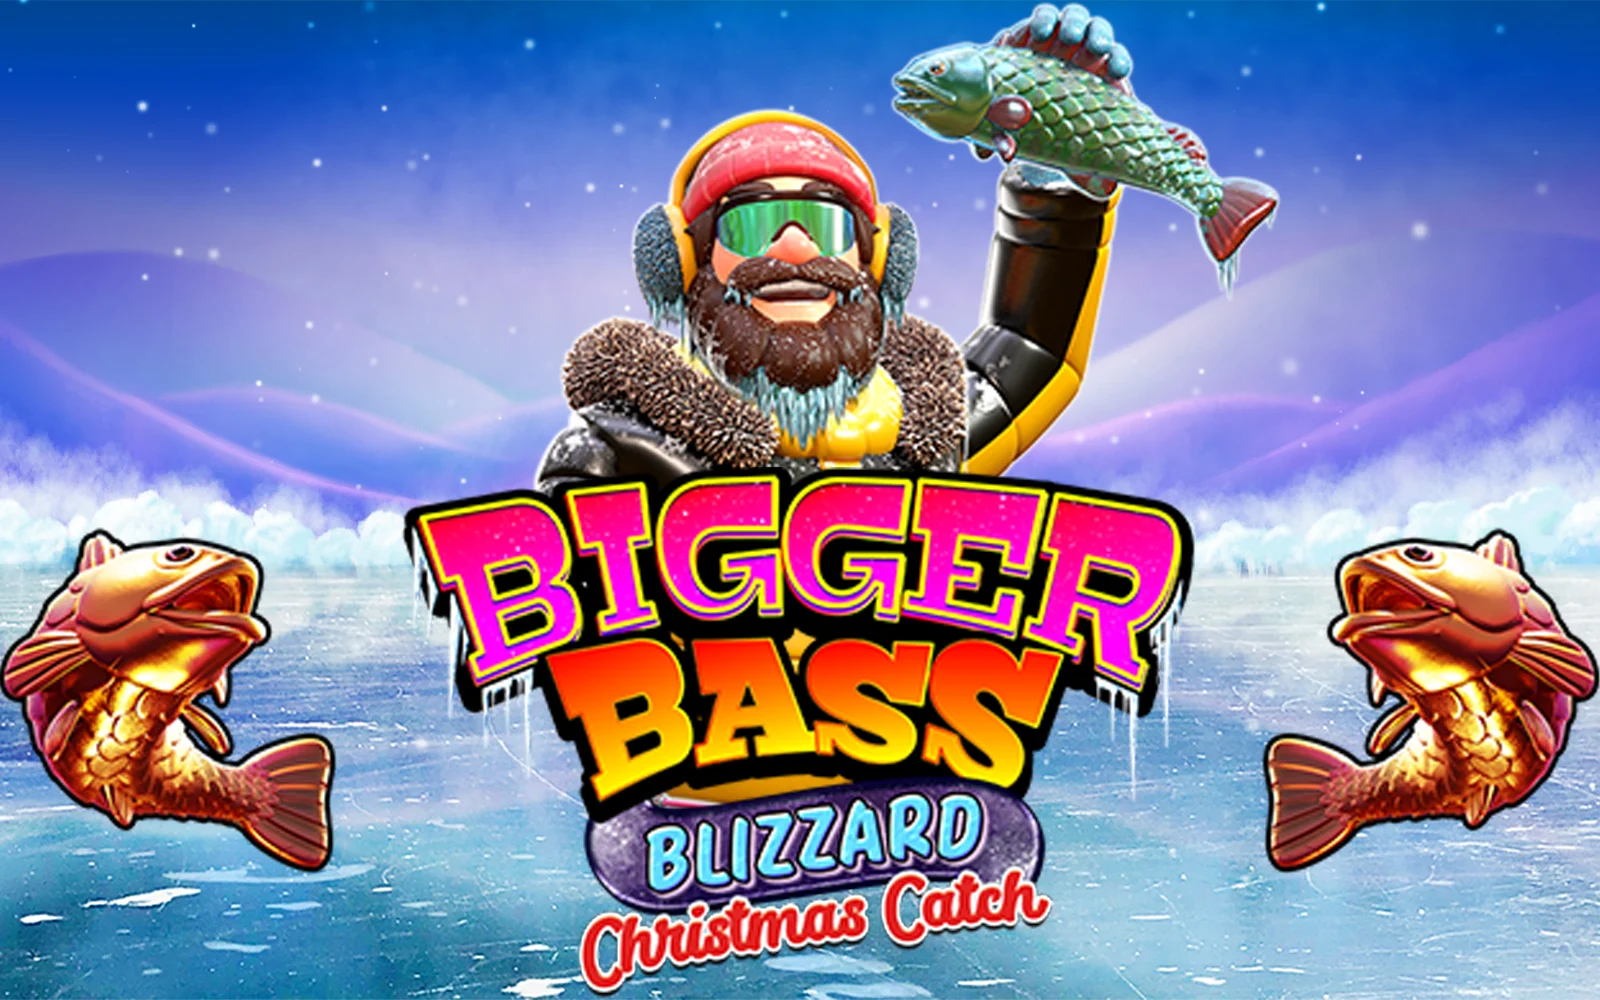 Грайте у Bigger Bass Blizzard - Christmas Catch™ в онлайн-казино Starcasino.be